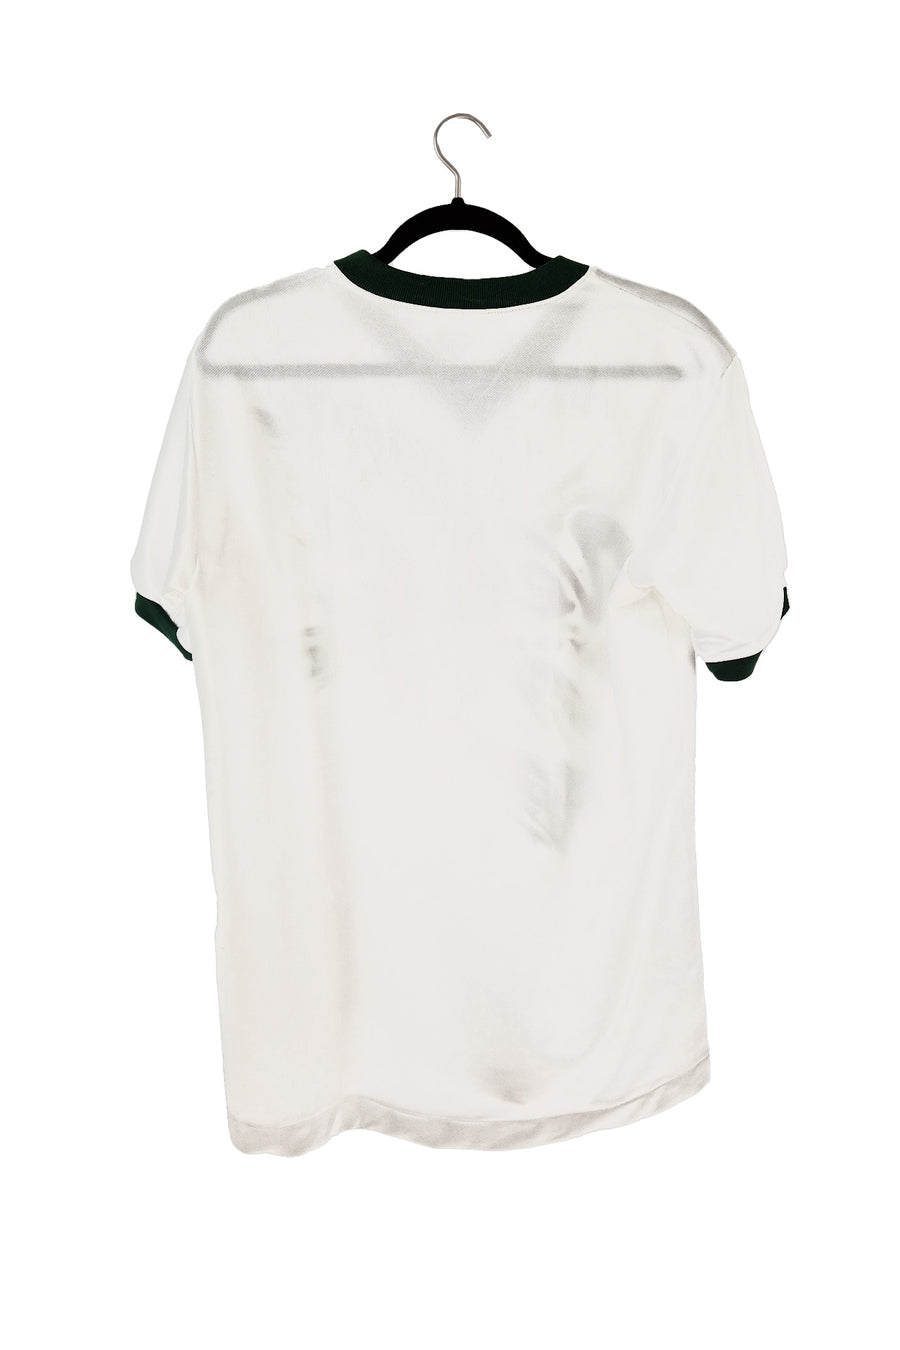 Tottenham Hotspur 1991 - 1993 Home Football Shirt